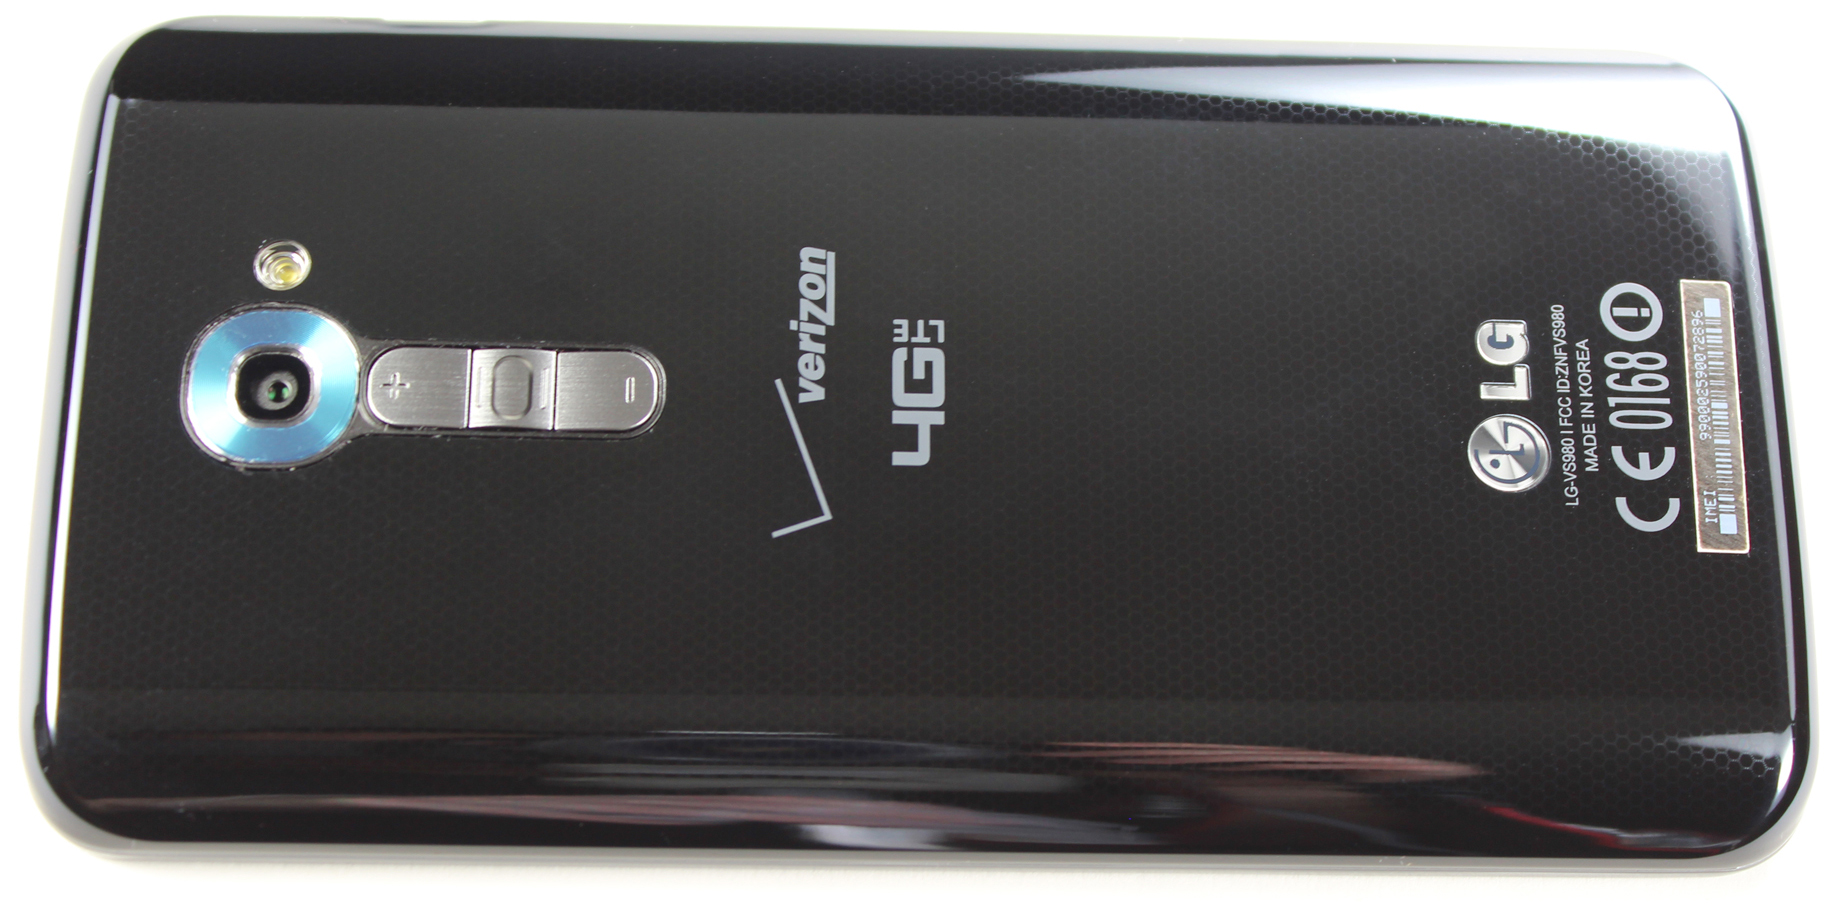 erklære kold nåde Review: LG's G2 smartphone gets caught living in the shadows of giants |  Ars Technica